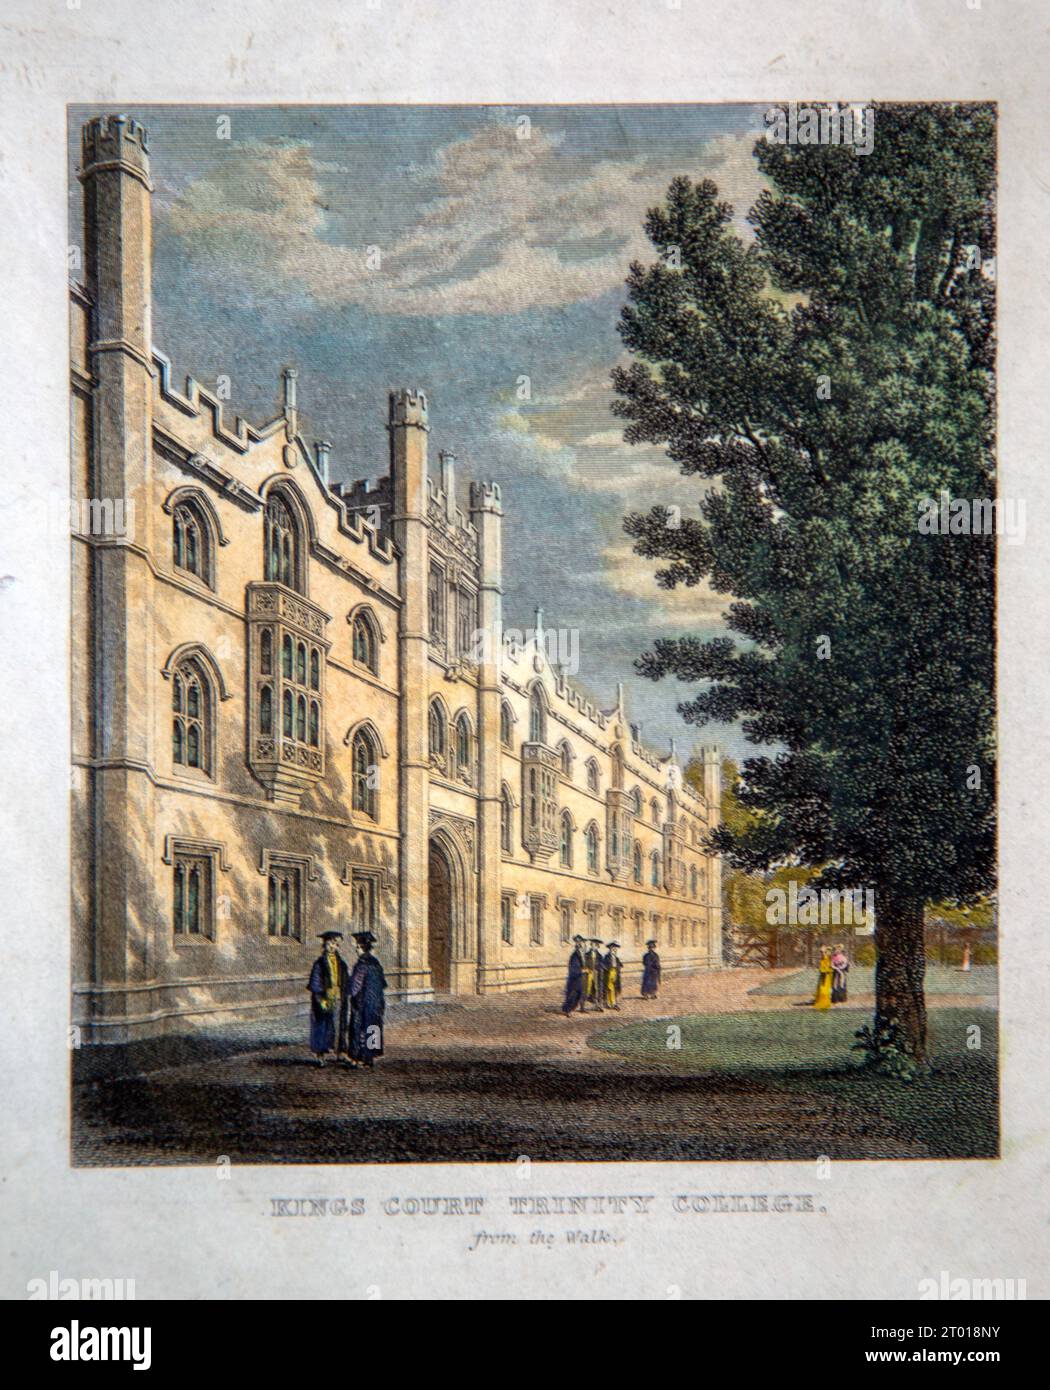 Kings Court, Trinity College, University of Cambridge, England, Uk nineteenth century coloured engraving Stock Photo